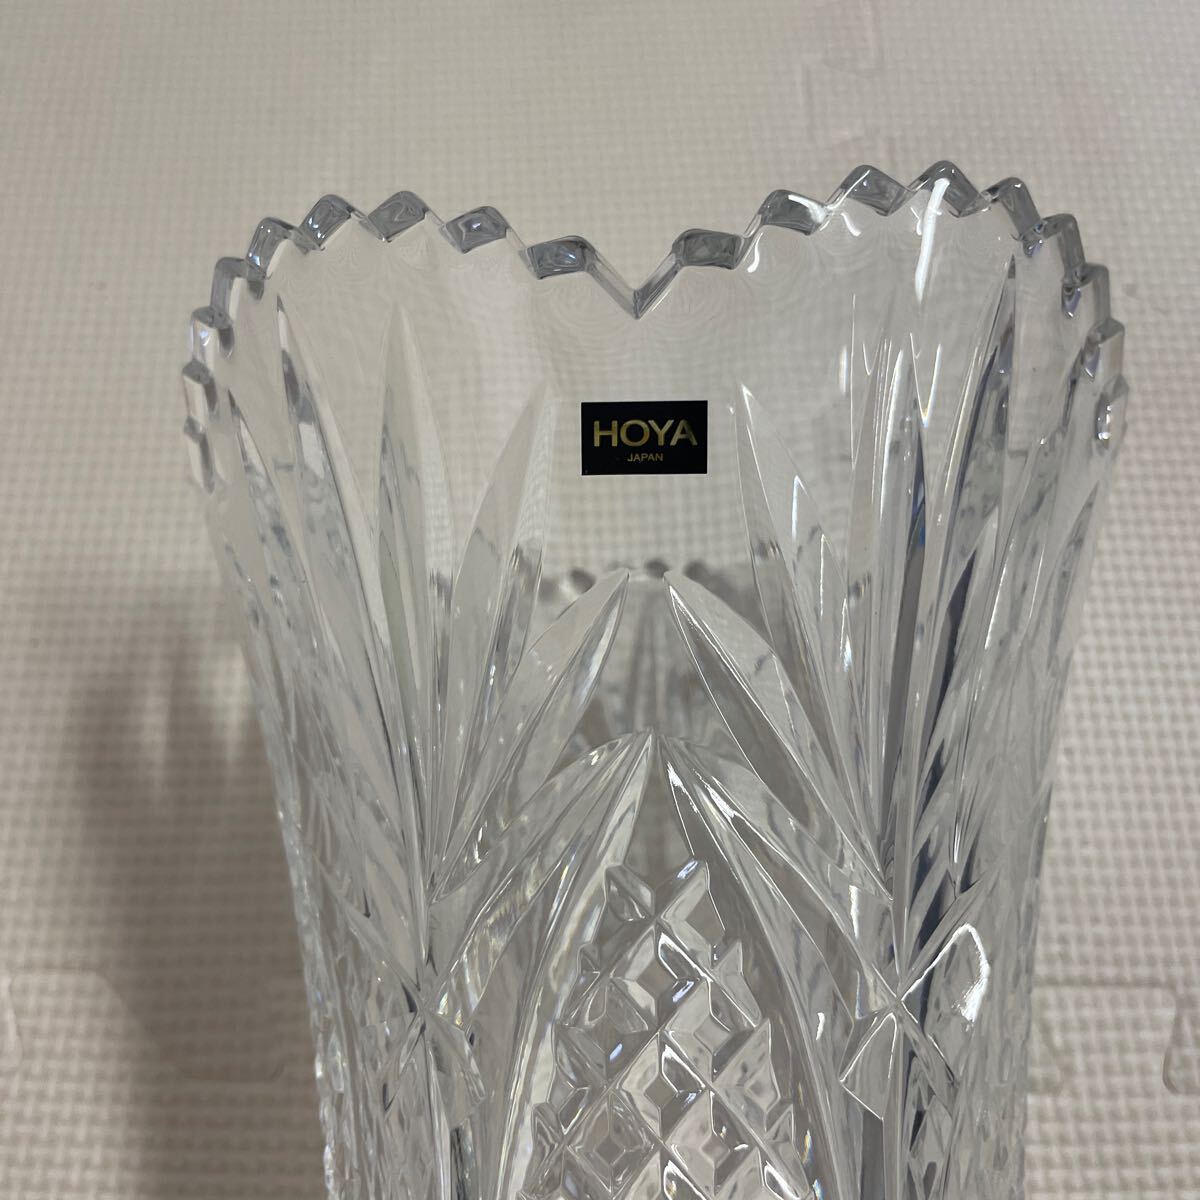 HOYA ホヤ クリスタル 花瓶 ガラス フラワーベースクリスタルガラス CRYSTAL 花器 インテリアの画像3